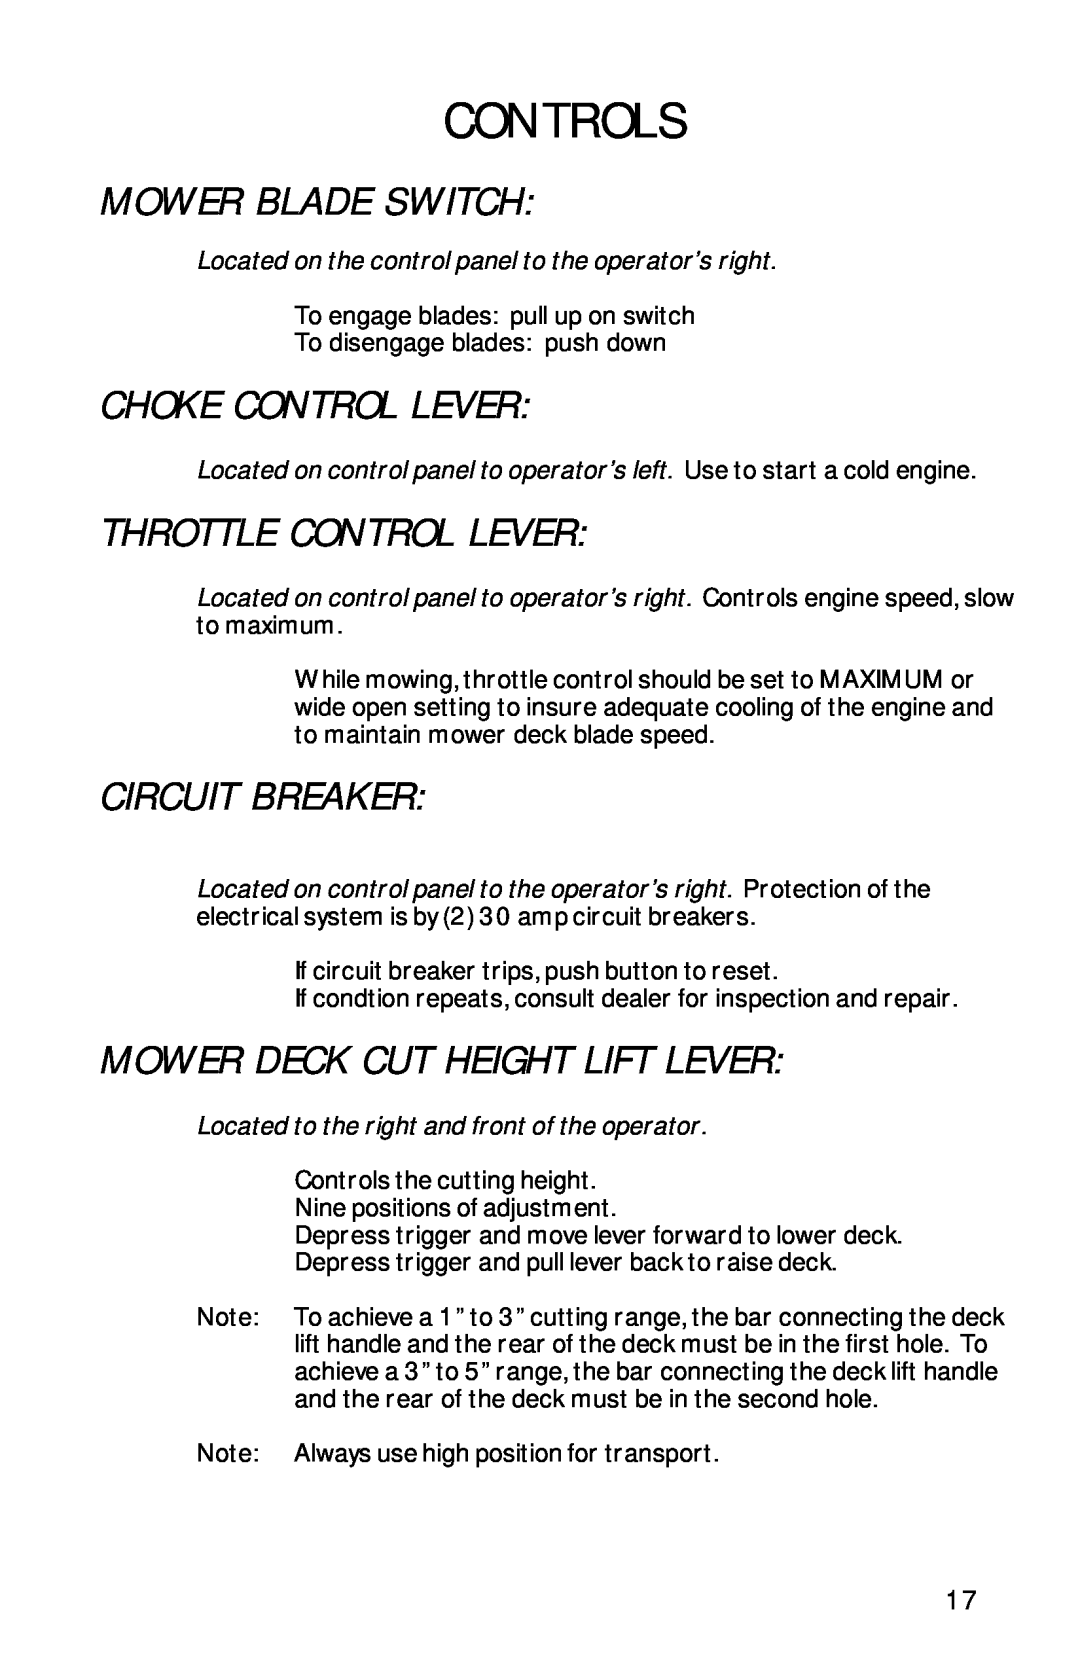 Dixon 13090-0601, ZTR 6023 manual Mower Blade Switch, Choke Control Lever, Throttle Control Lever, Circuit Breaker, Controls 